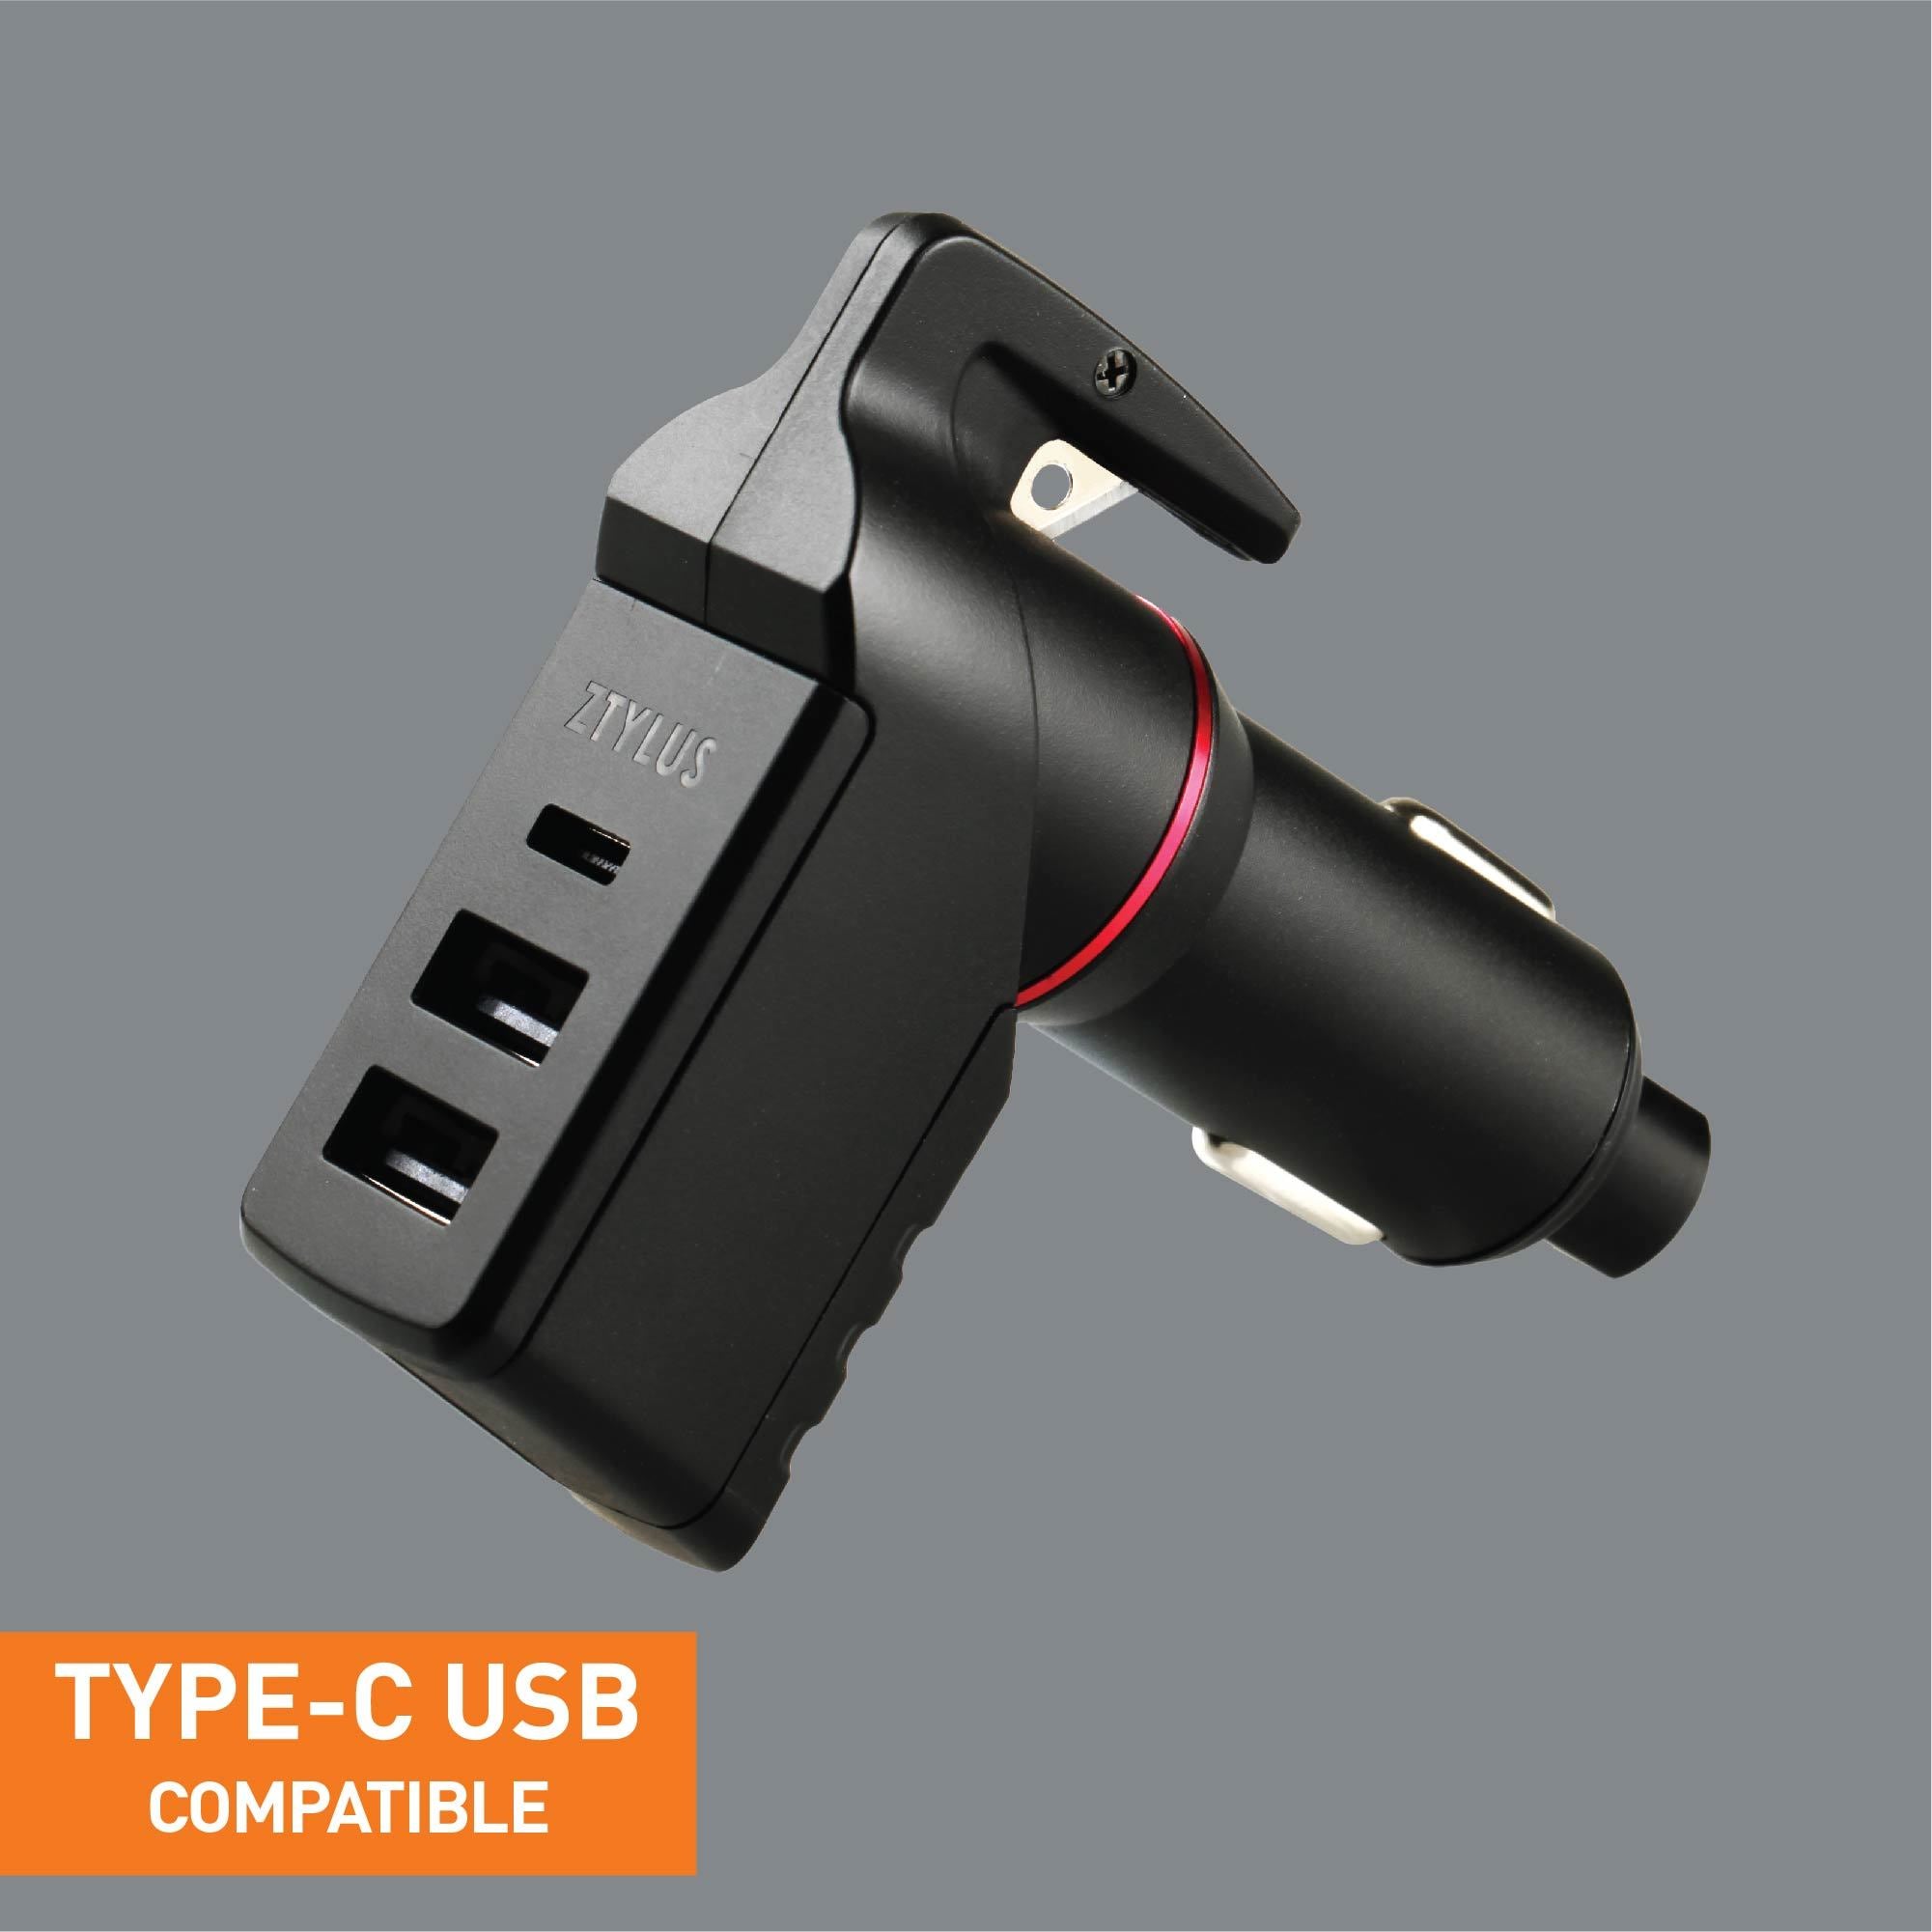 Stinger Type-C USB Emergency Tool - A Life-Saving Innovation Black